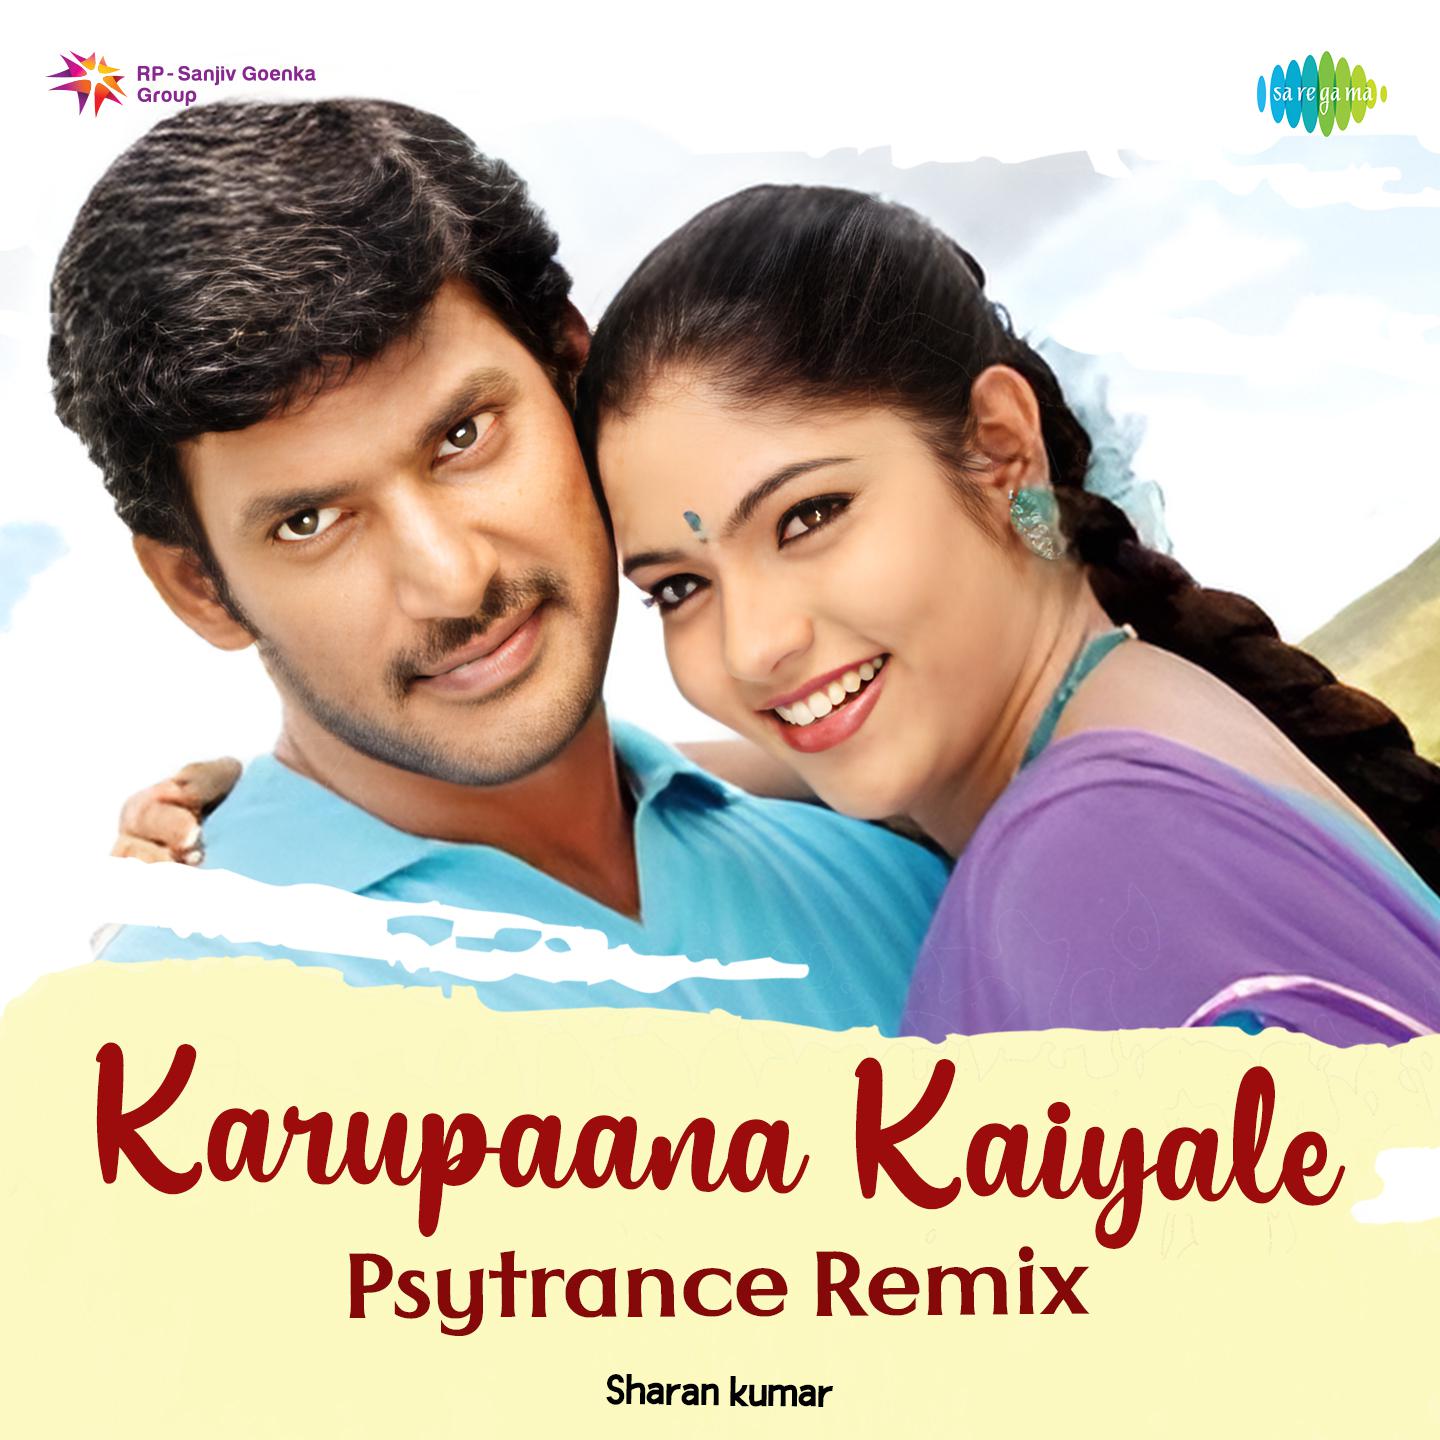 Sharan Kumar - Karupaana Kaiyale - Psytrance Remix